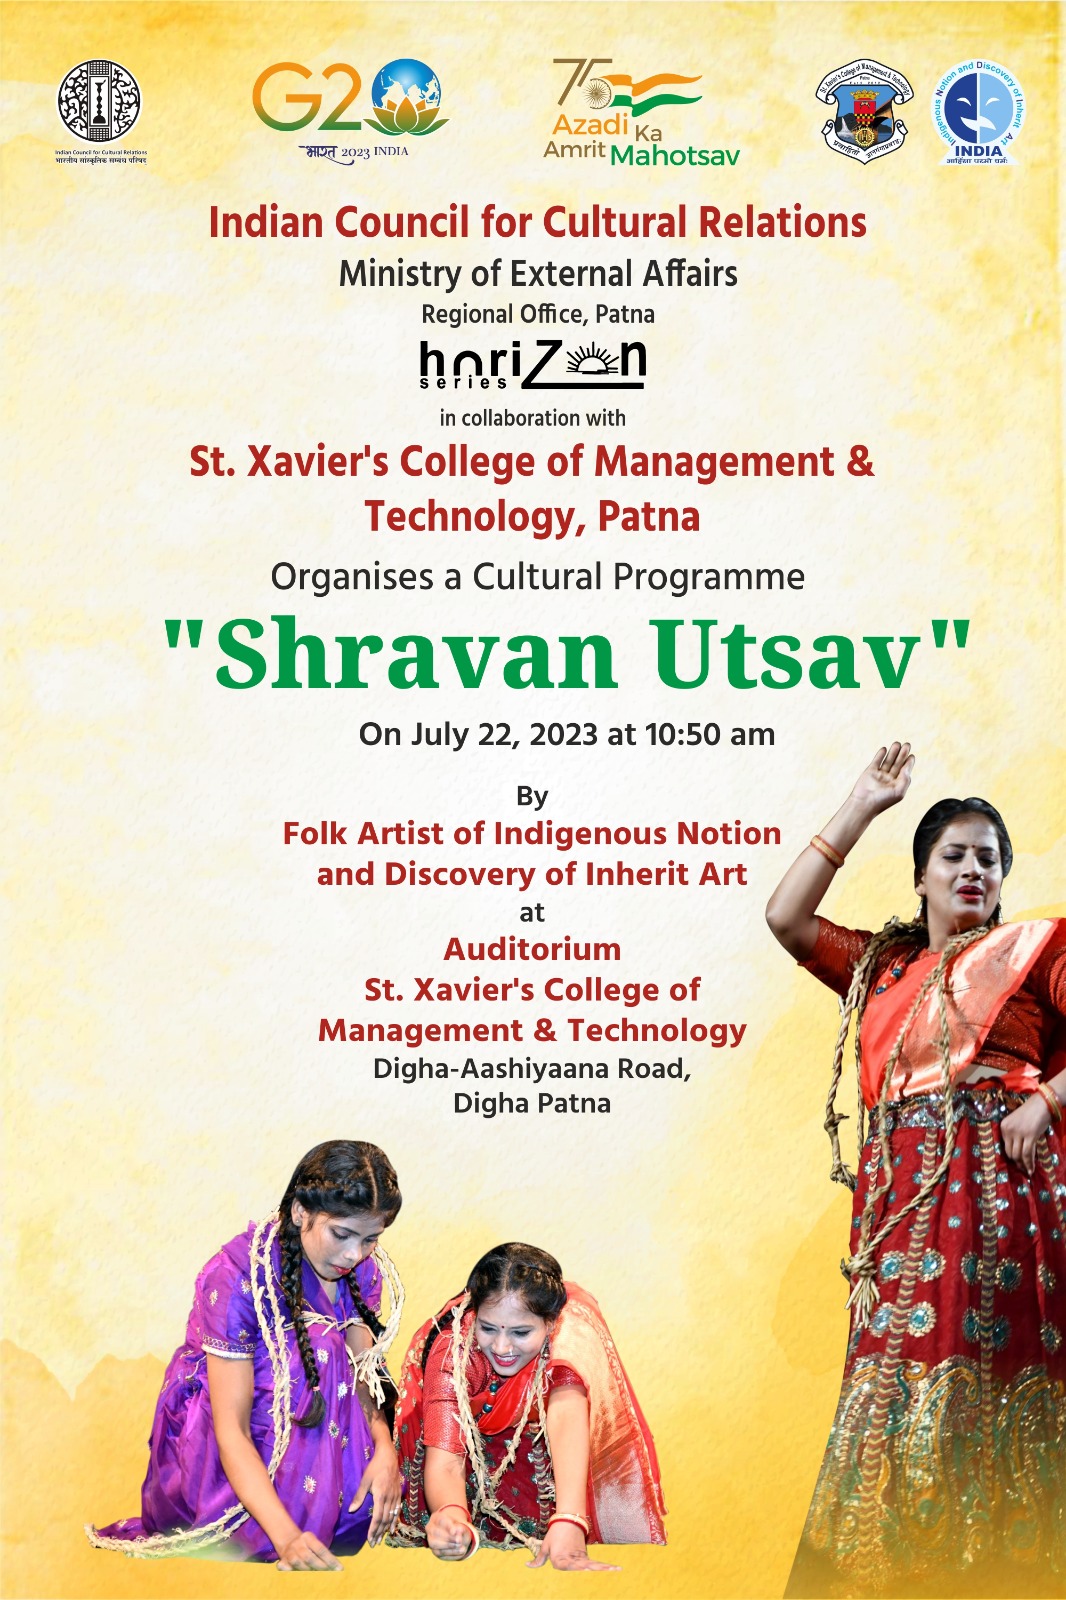 Event of  “Shravan Utsav” by Indigenous Notion and Discovery of Inherit Art  under Horizon series programme of ICCR Regional Office Patna.